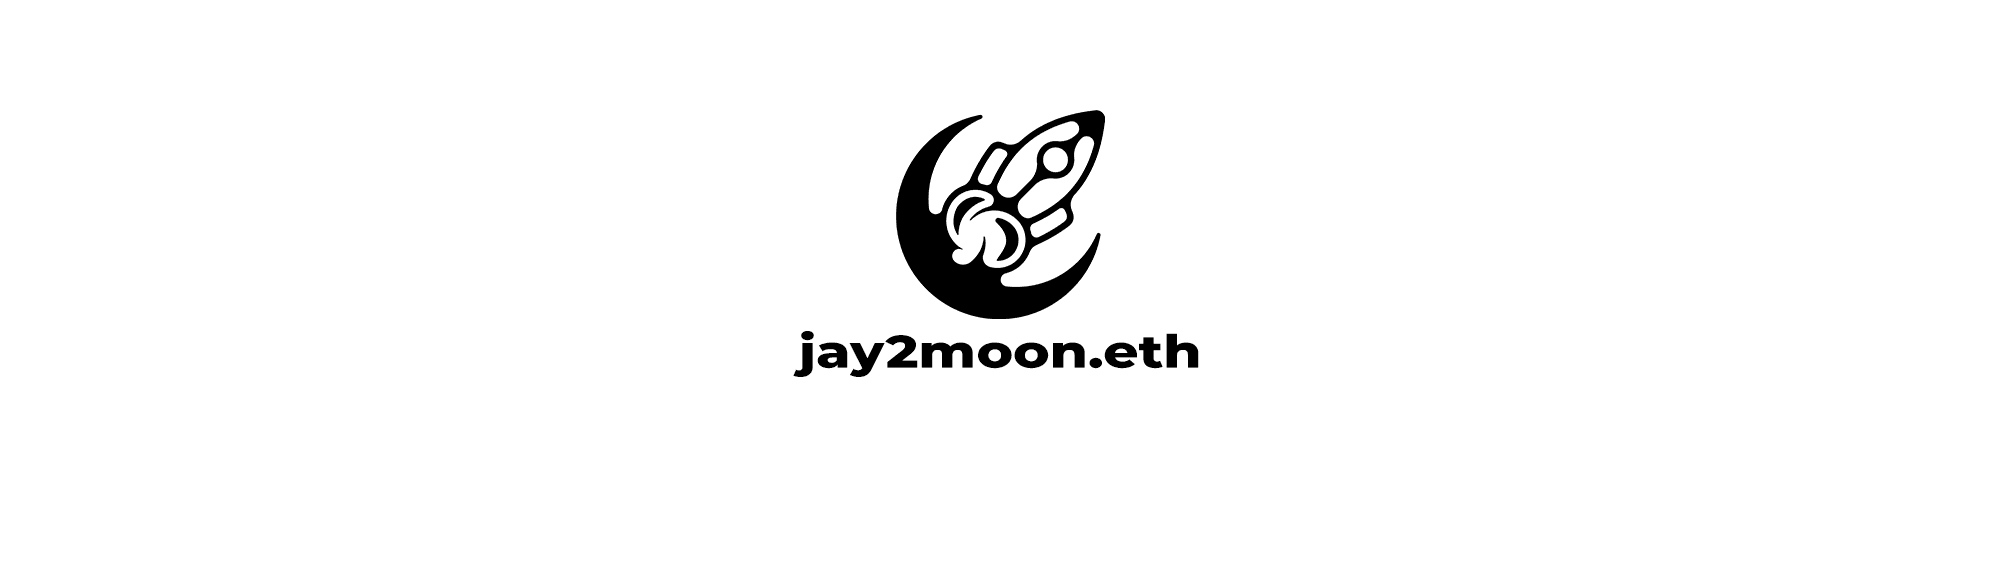 jay2moon banner